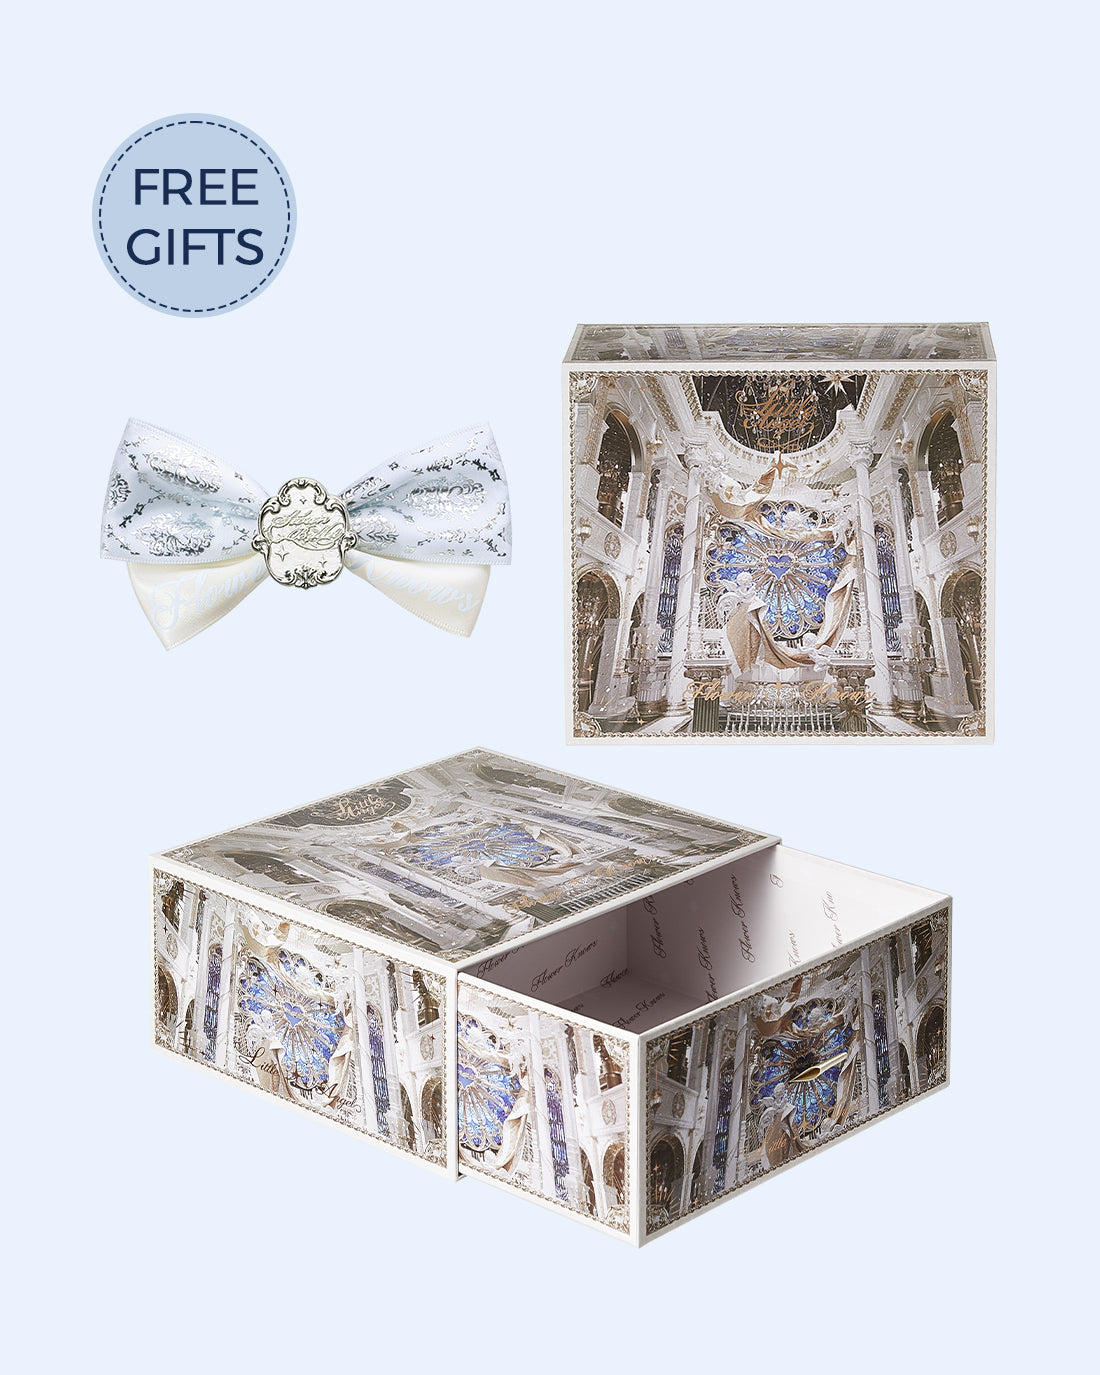 Unicorn Lip Gloss Gift Set | Customize your own bundle